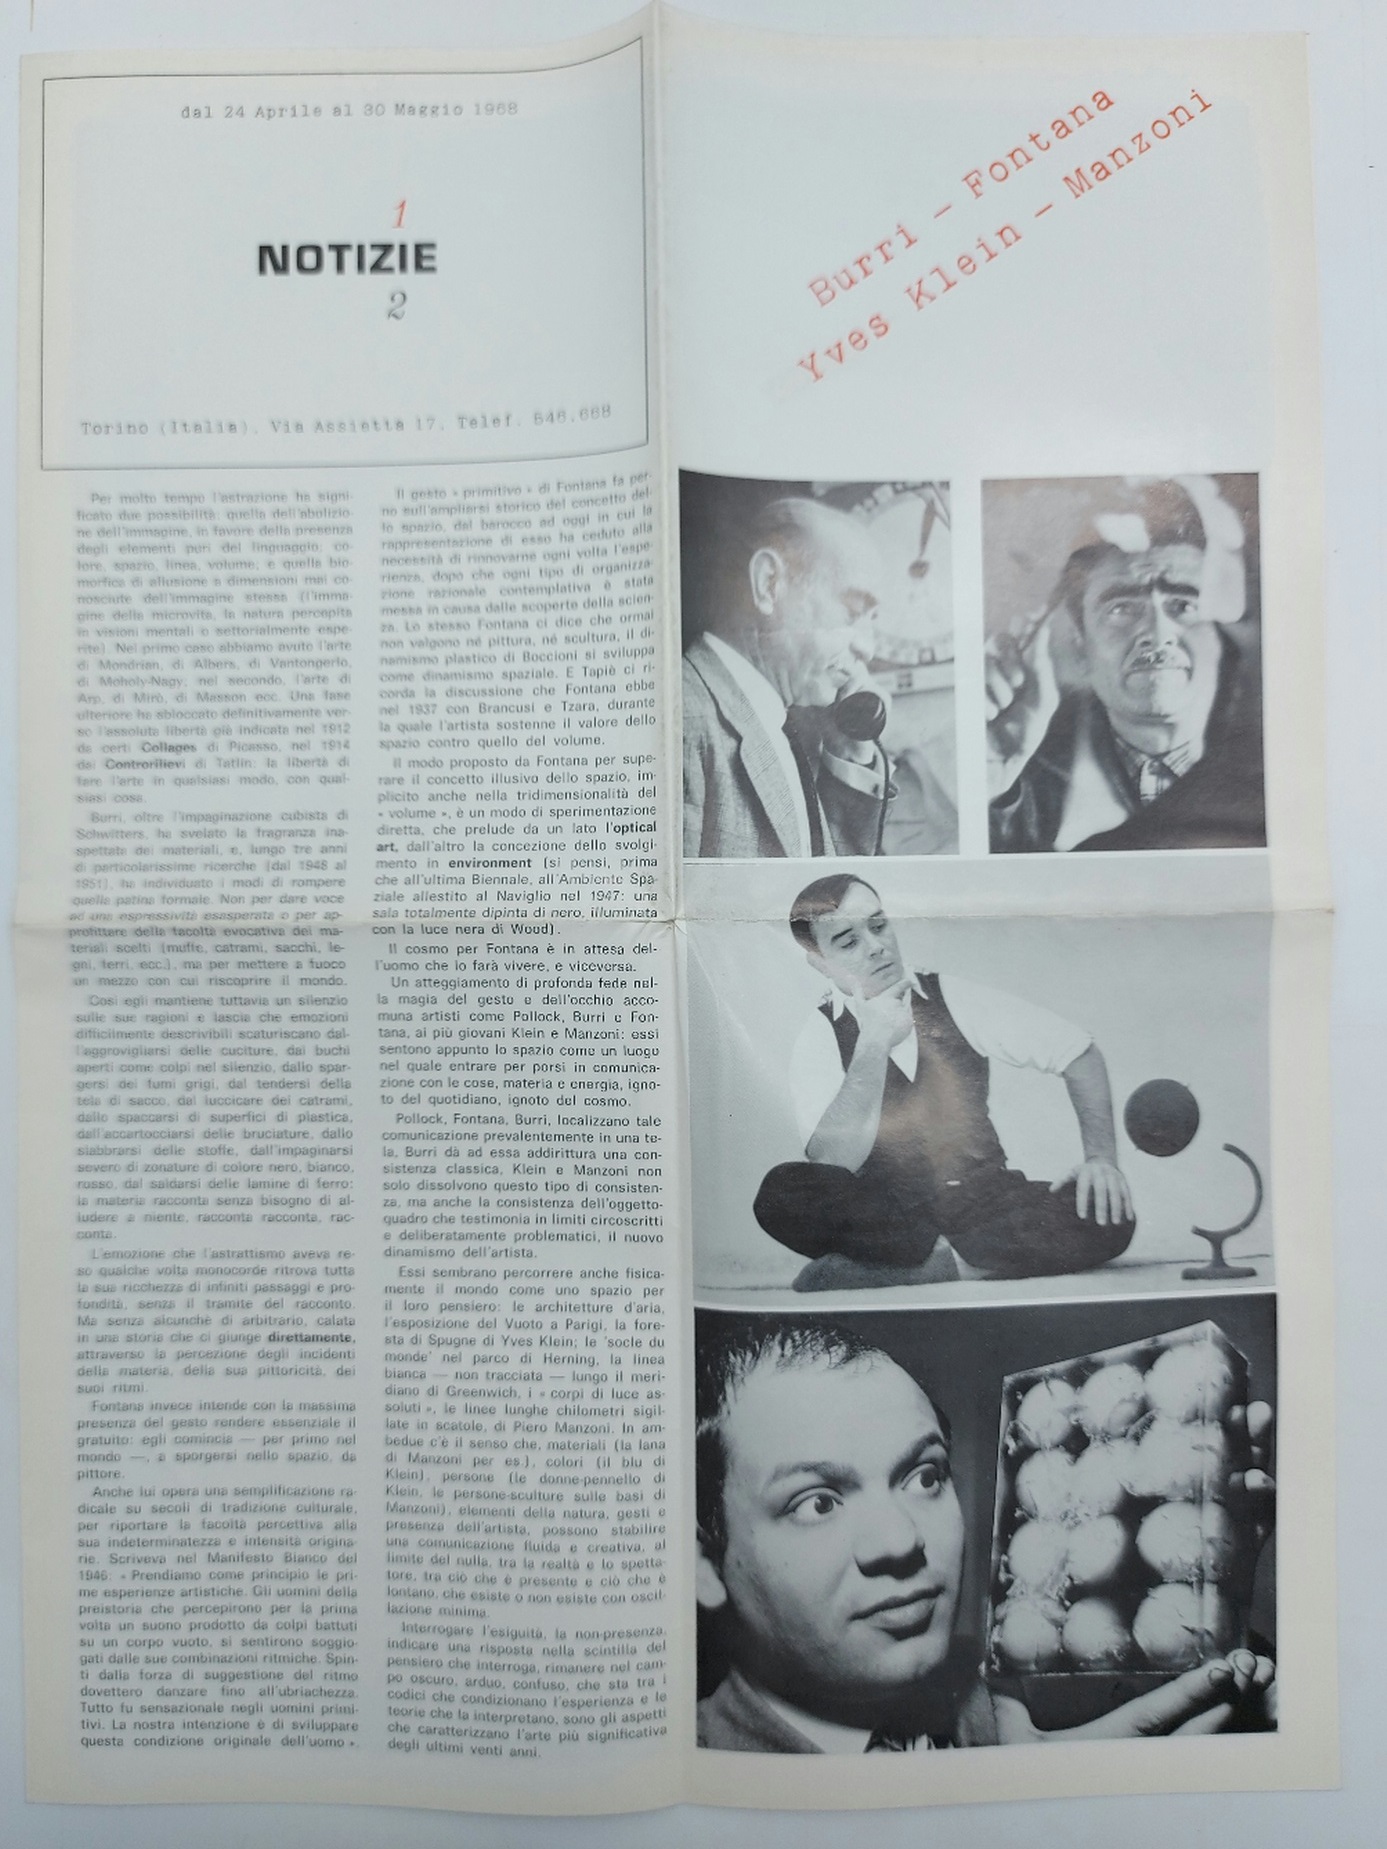 Burri, Fontana, Yves Klein, Manzoni dal 24 aprile al 30 maggio 1968. Notizie 1/2, Torino, Via Assietta